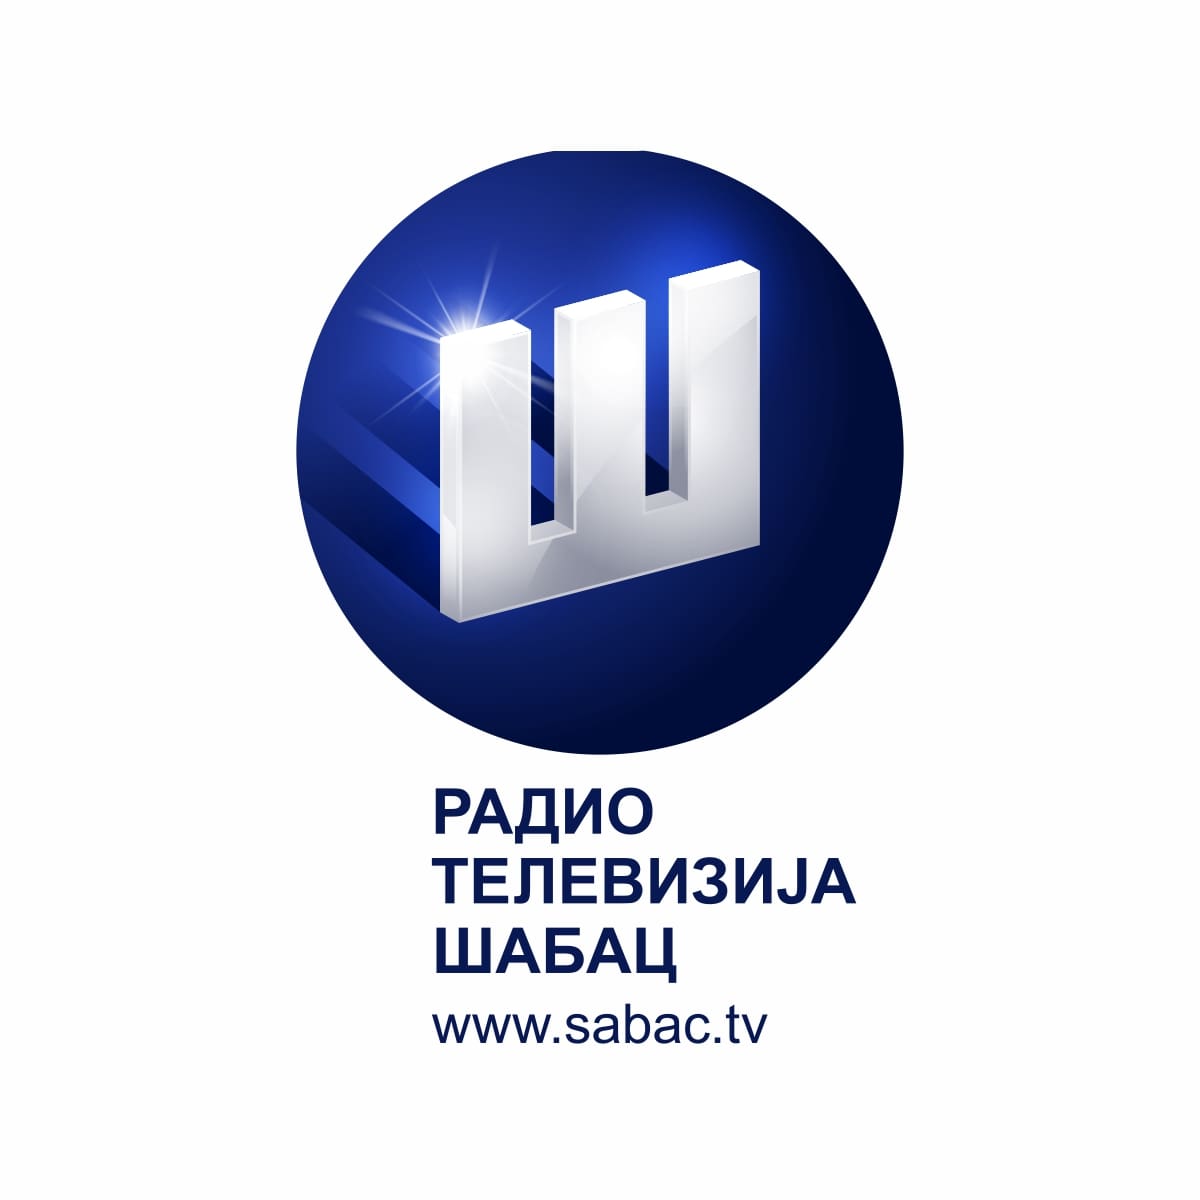 RTV Šabac logo design